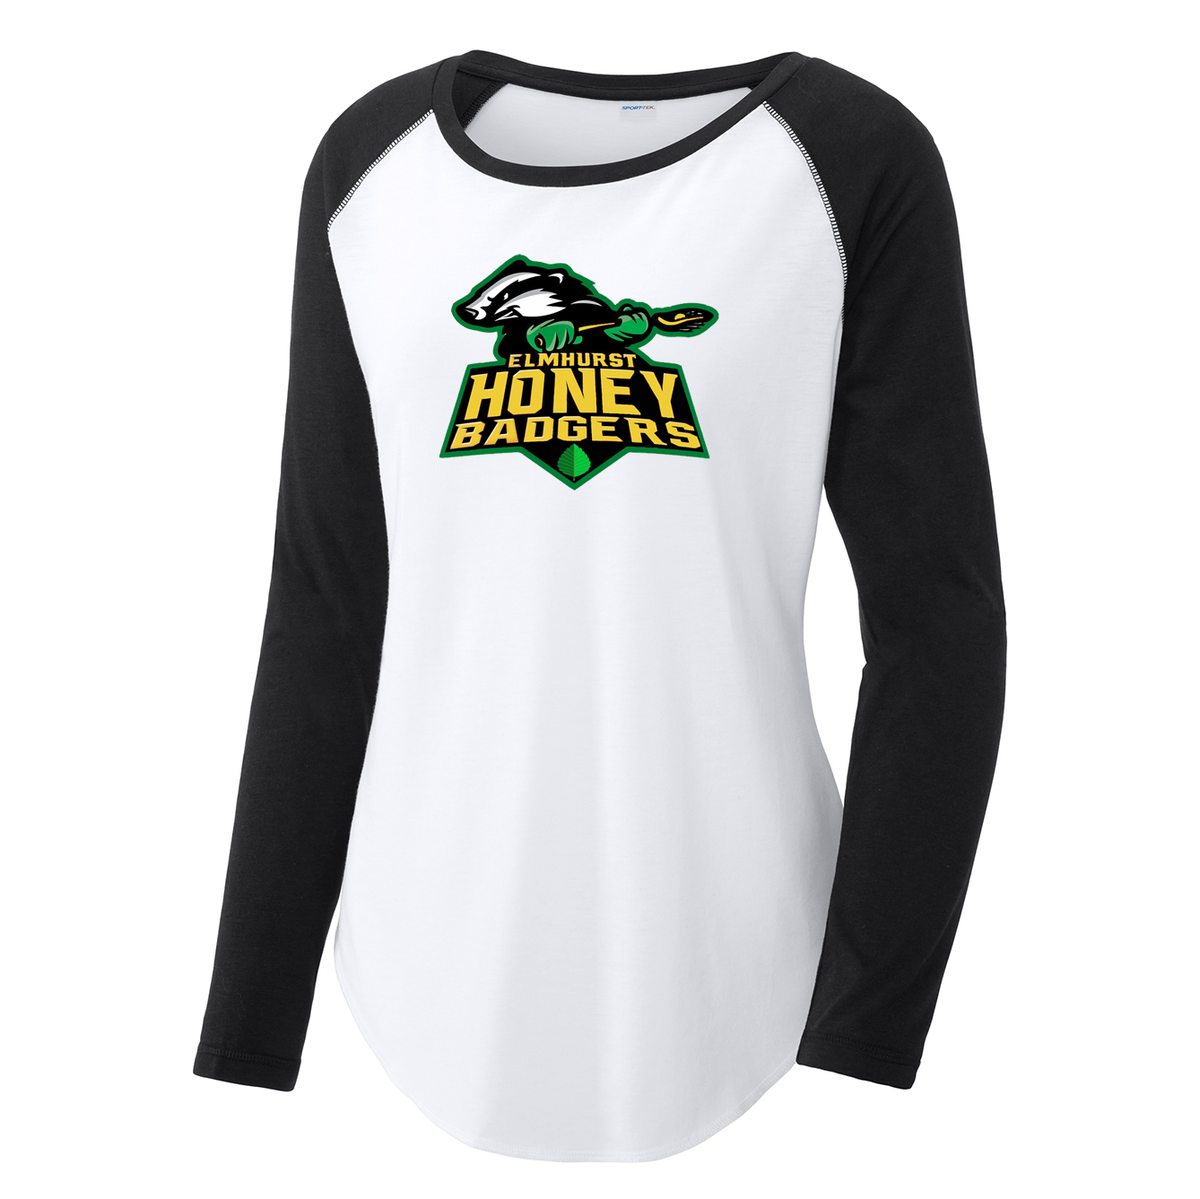 Honey Badgers Lacrosse Women's Raglan Long Sleeve CottonTouch